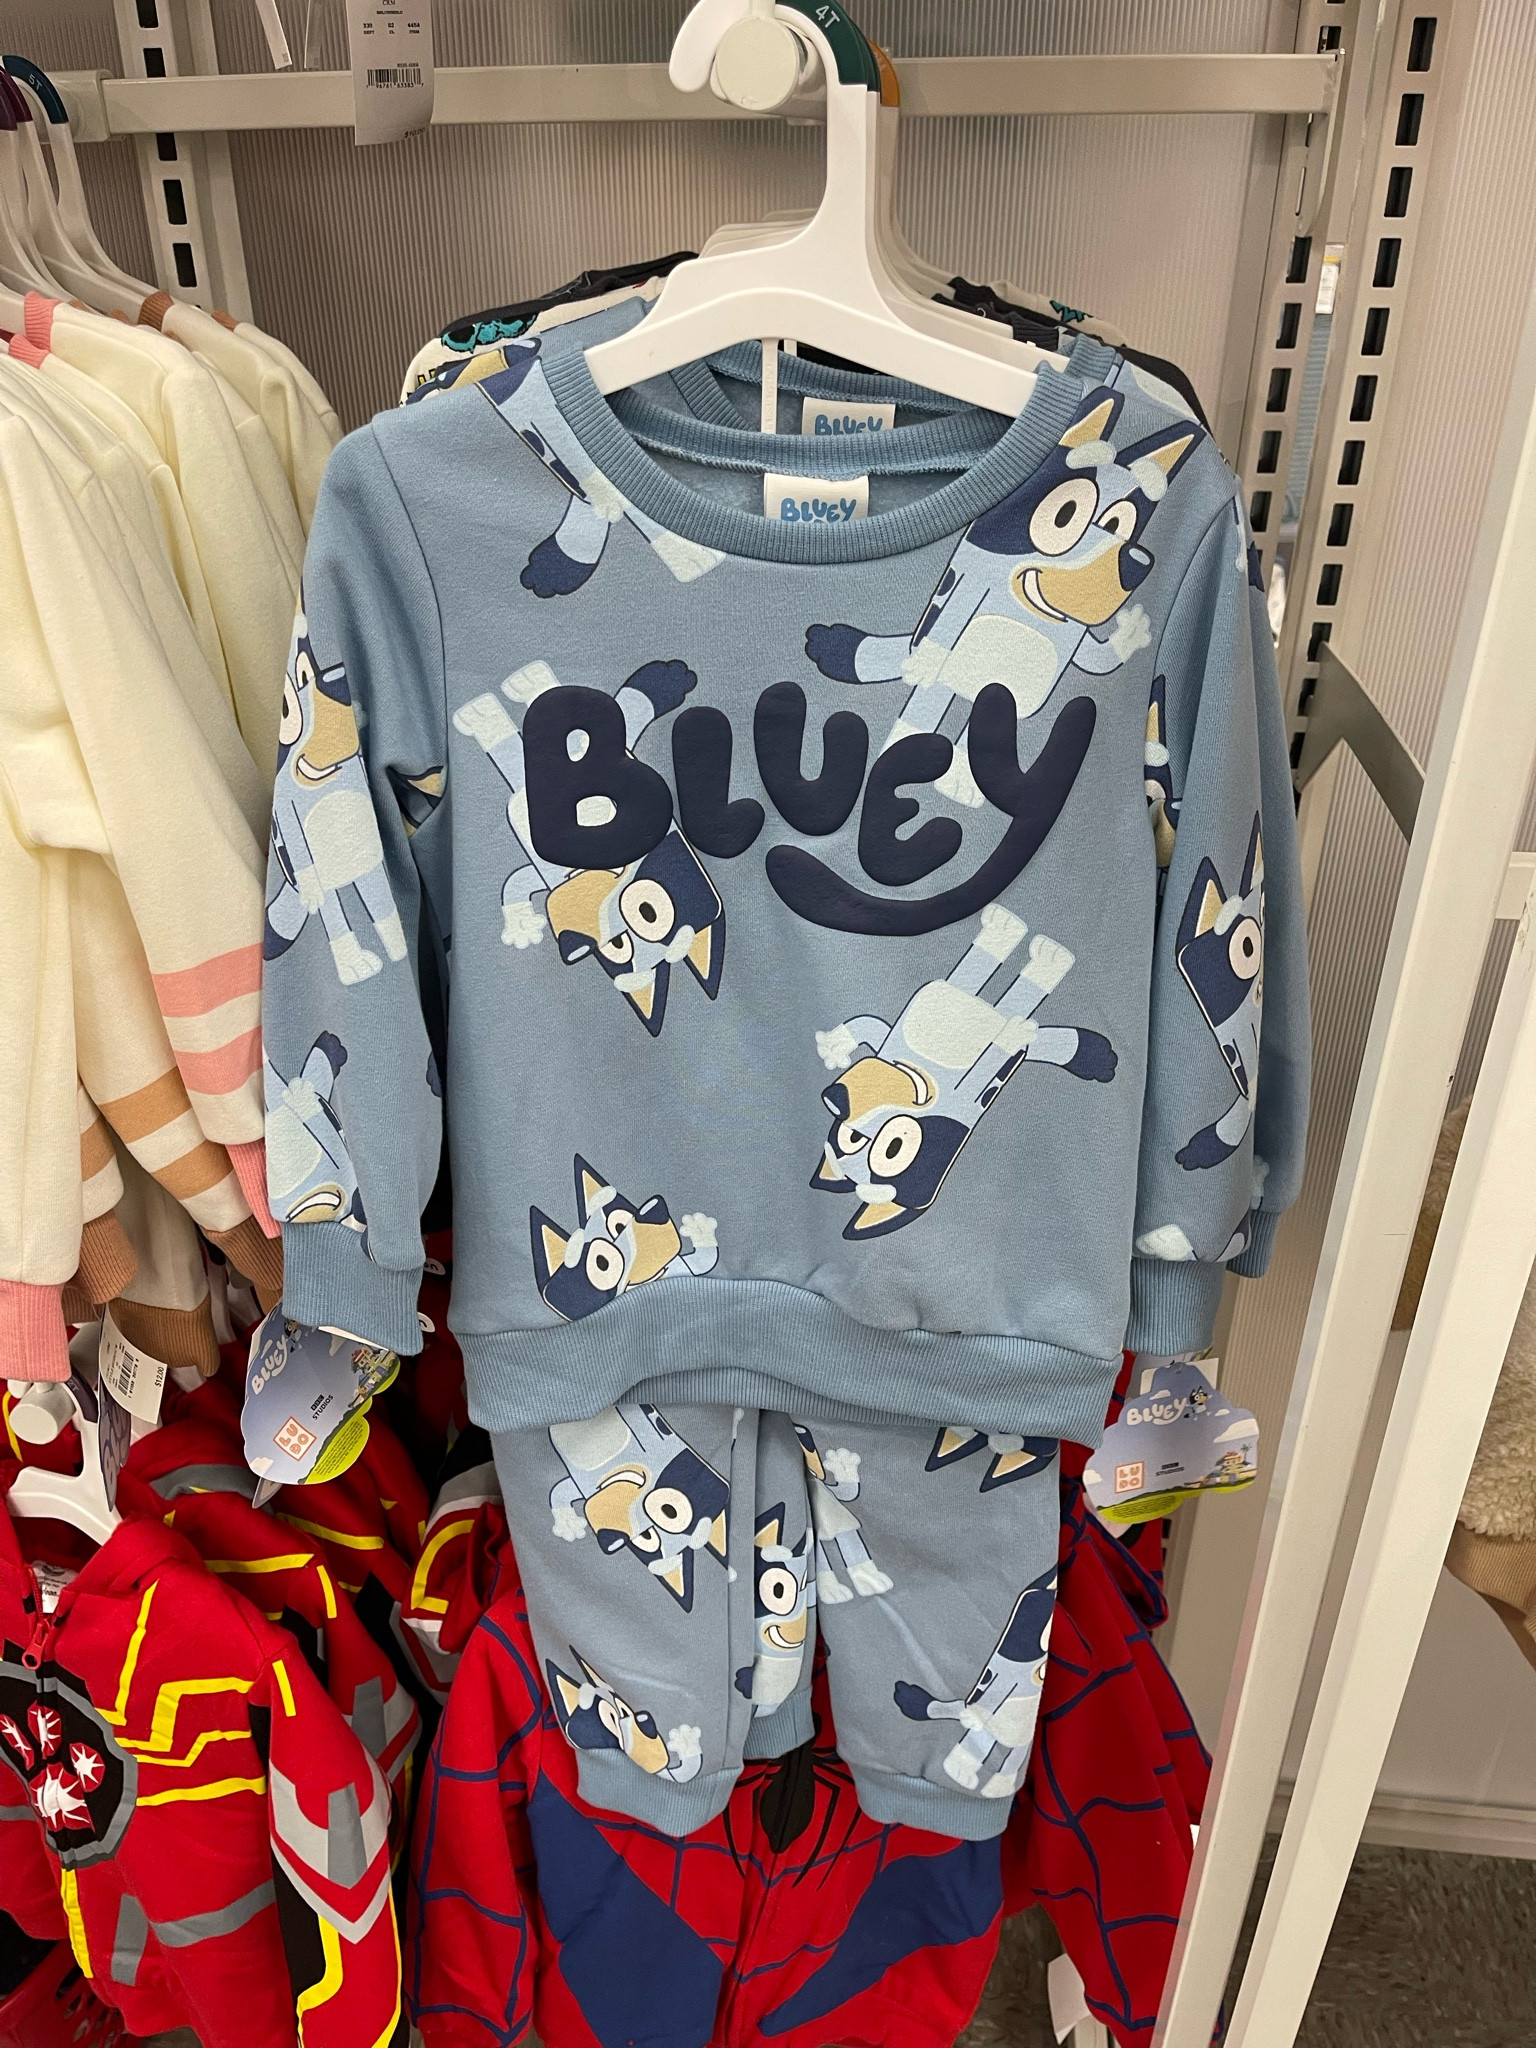 Toddler 4pc Bluey Snug Fit Pajama Set - Teal Blue